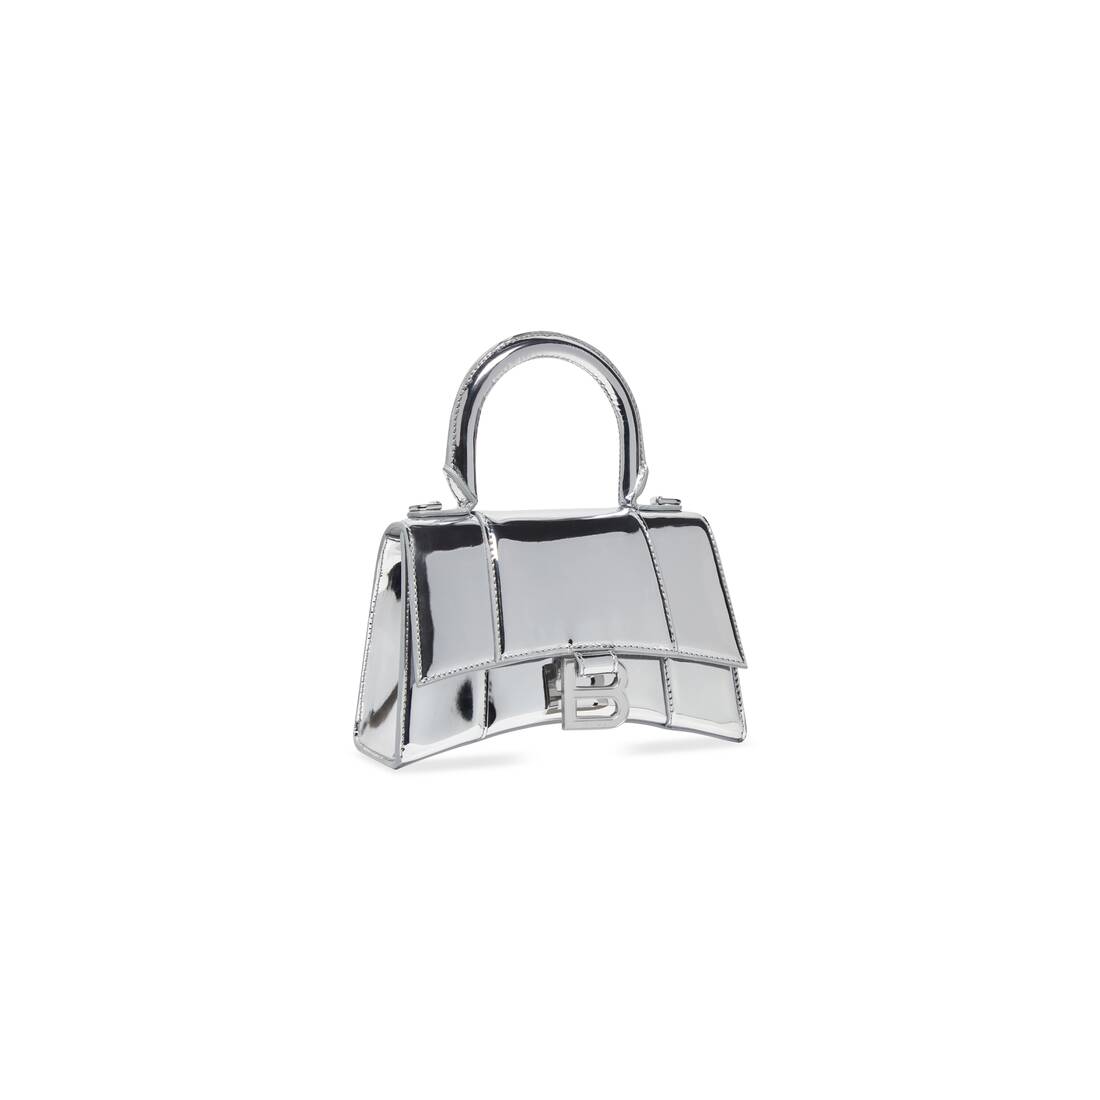 Hourglass leather handbag Balenciaga Silver in Leather - 34052799